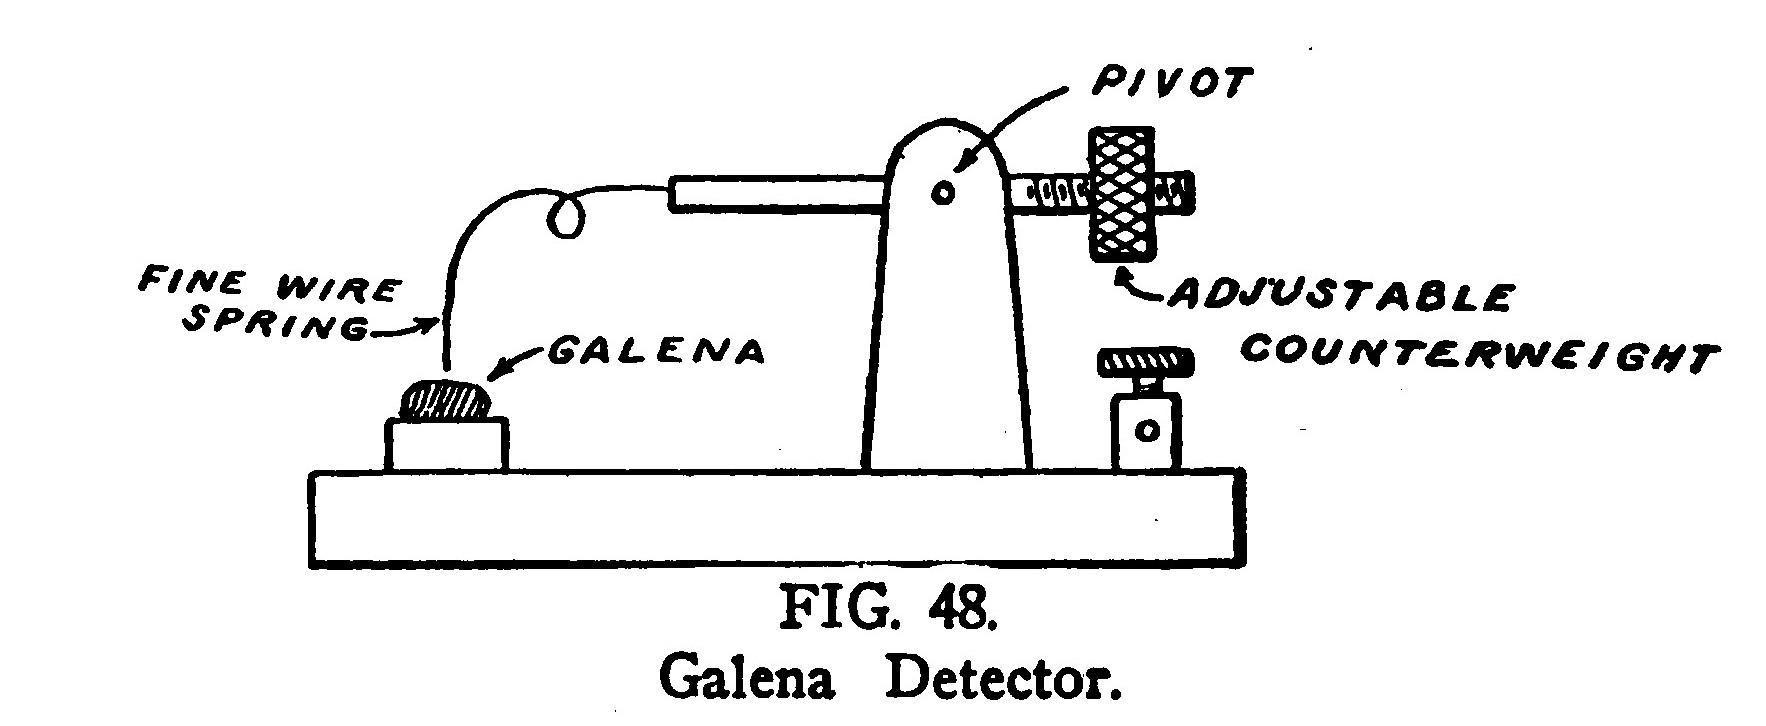 FIG. 48. Galena Detector.